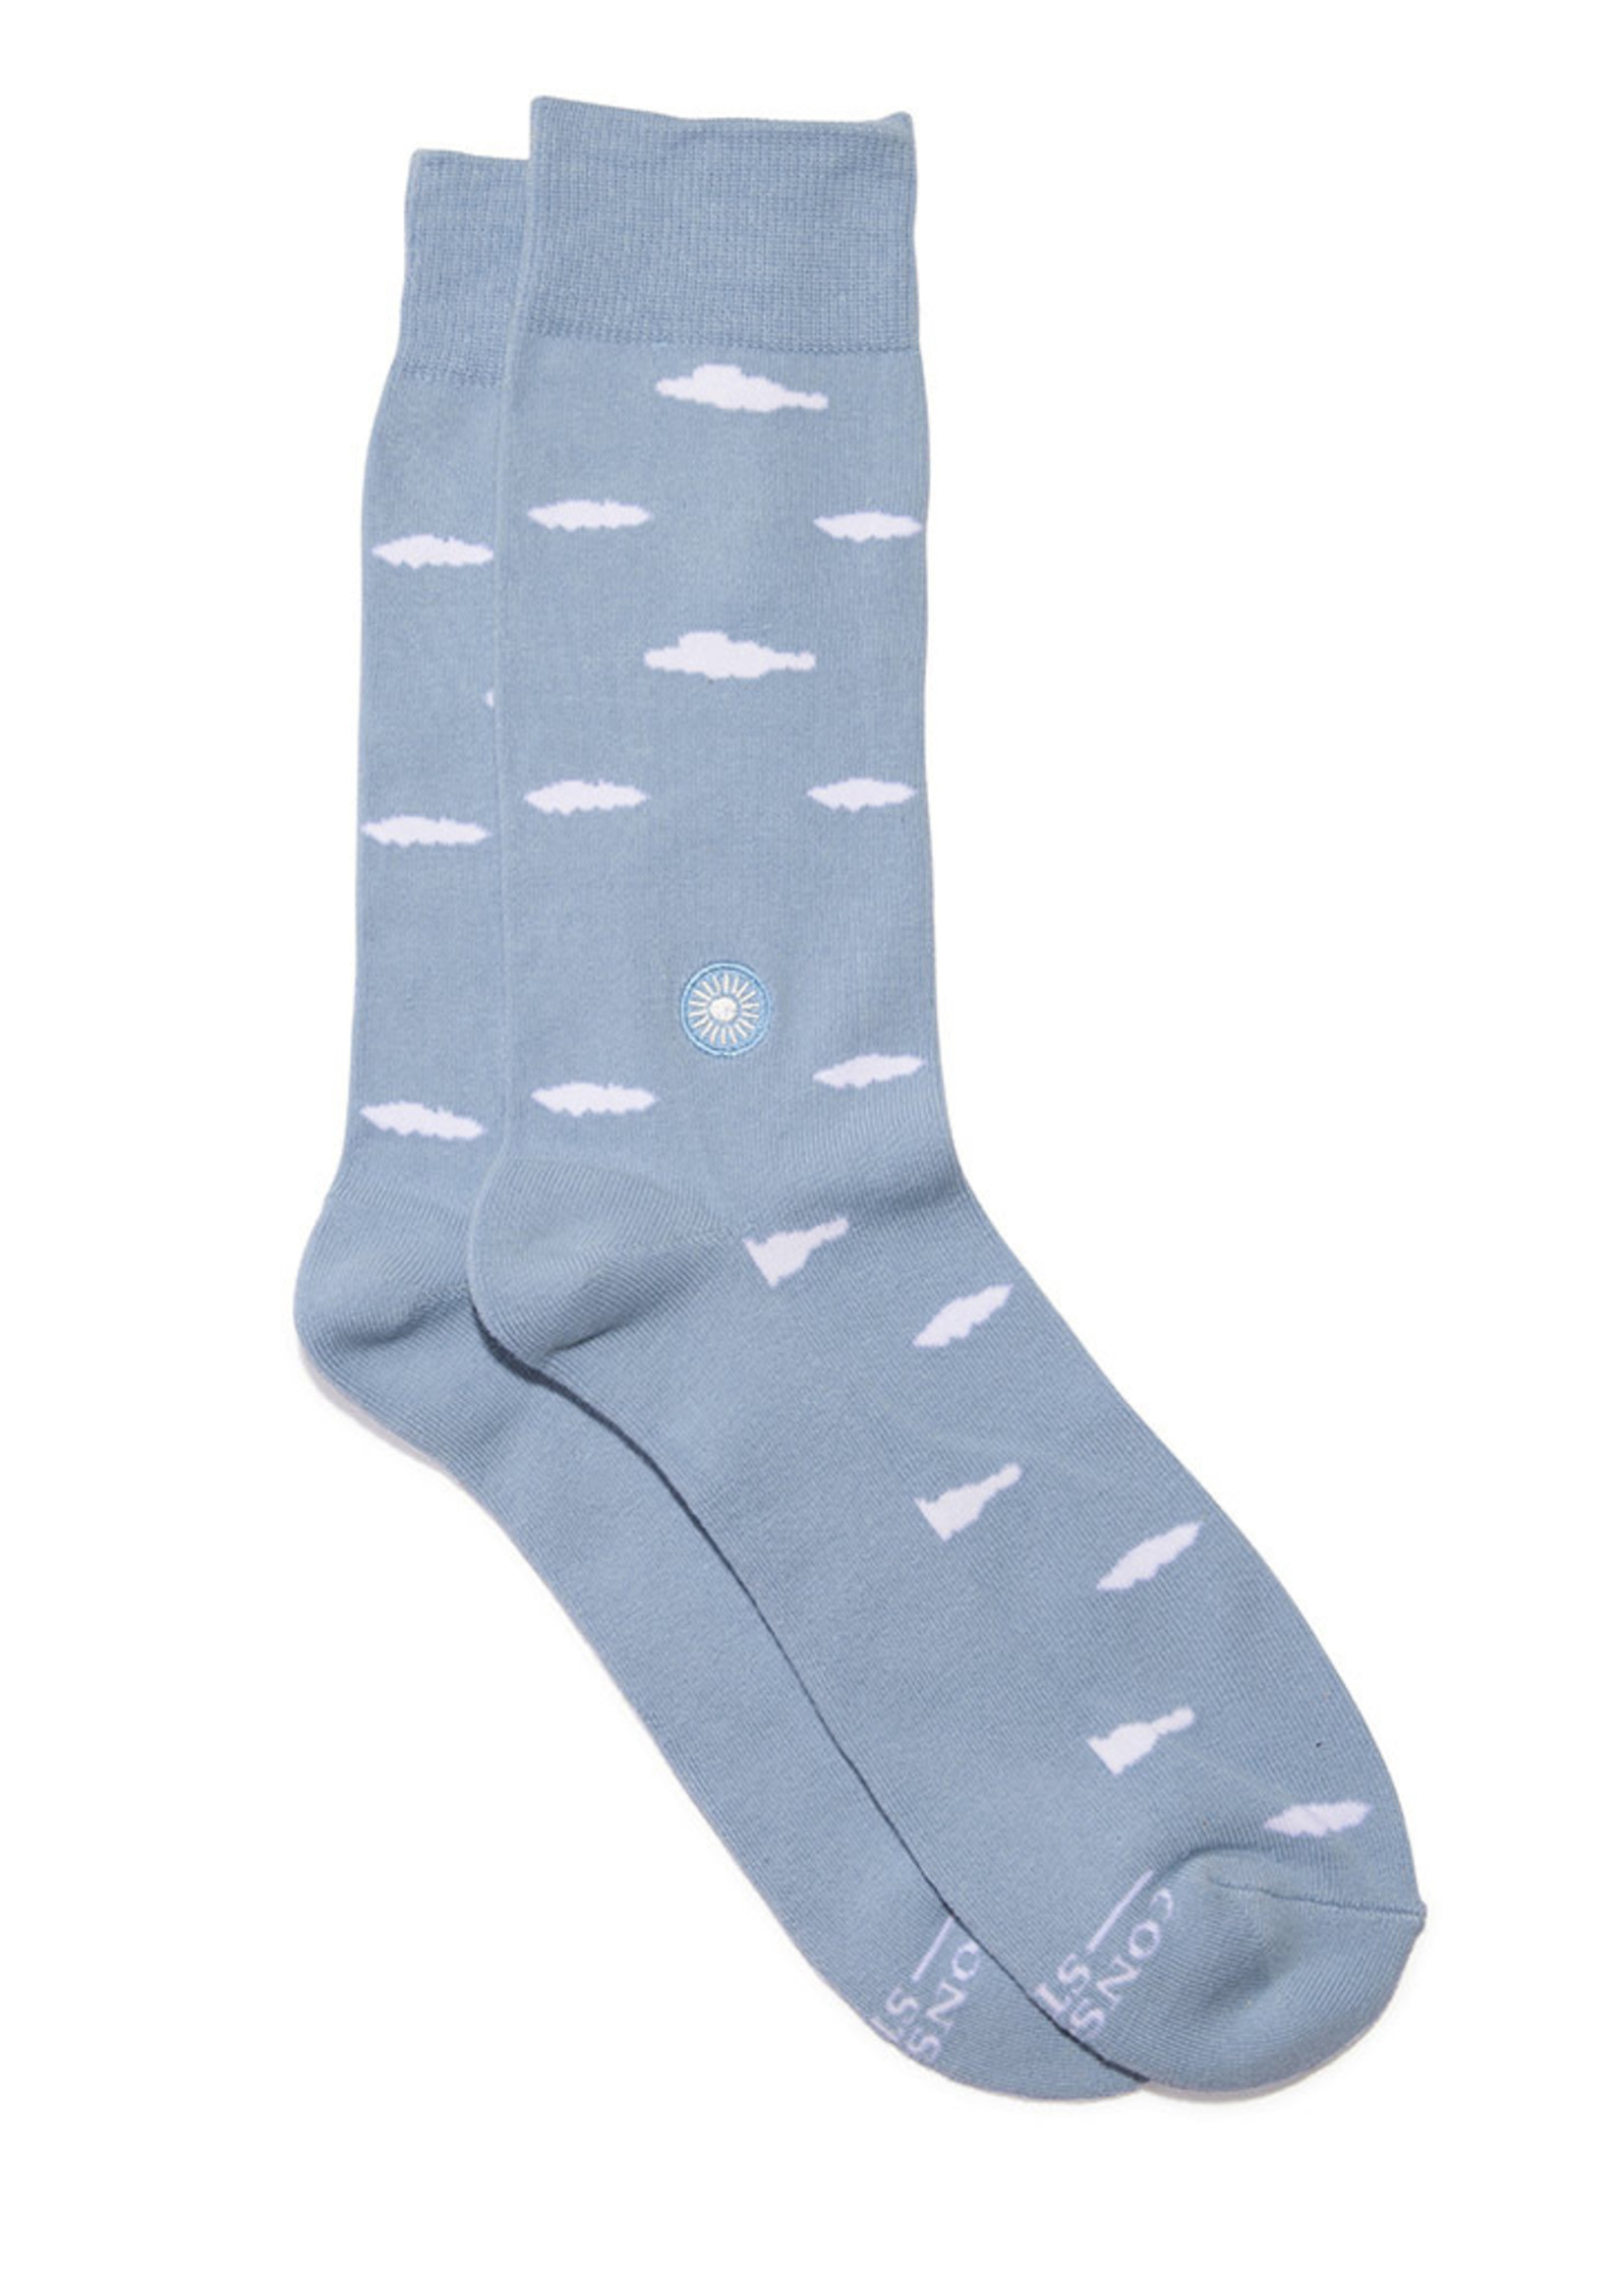 Conscious Step Men's Cloud Socks that Support Mental Health